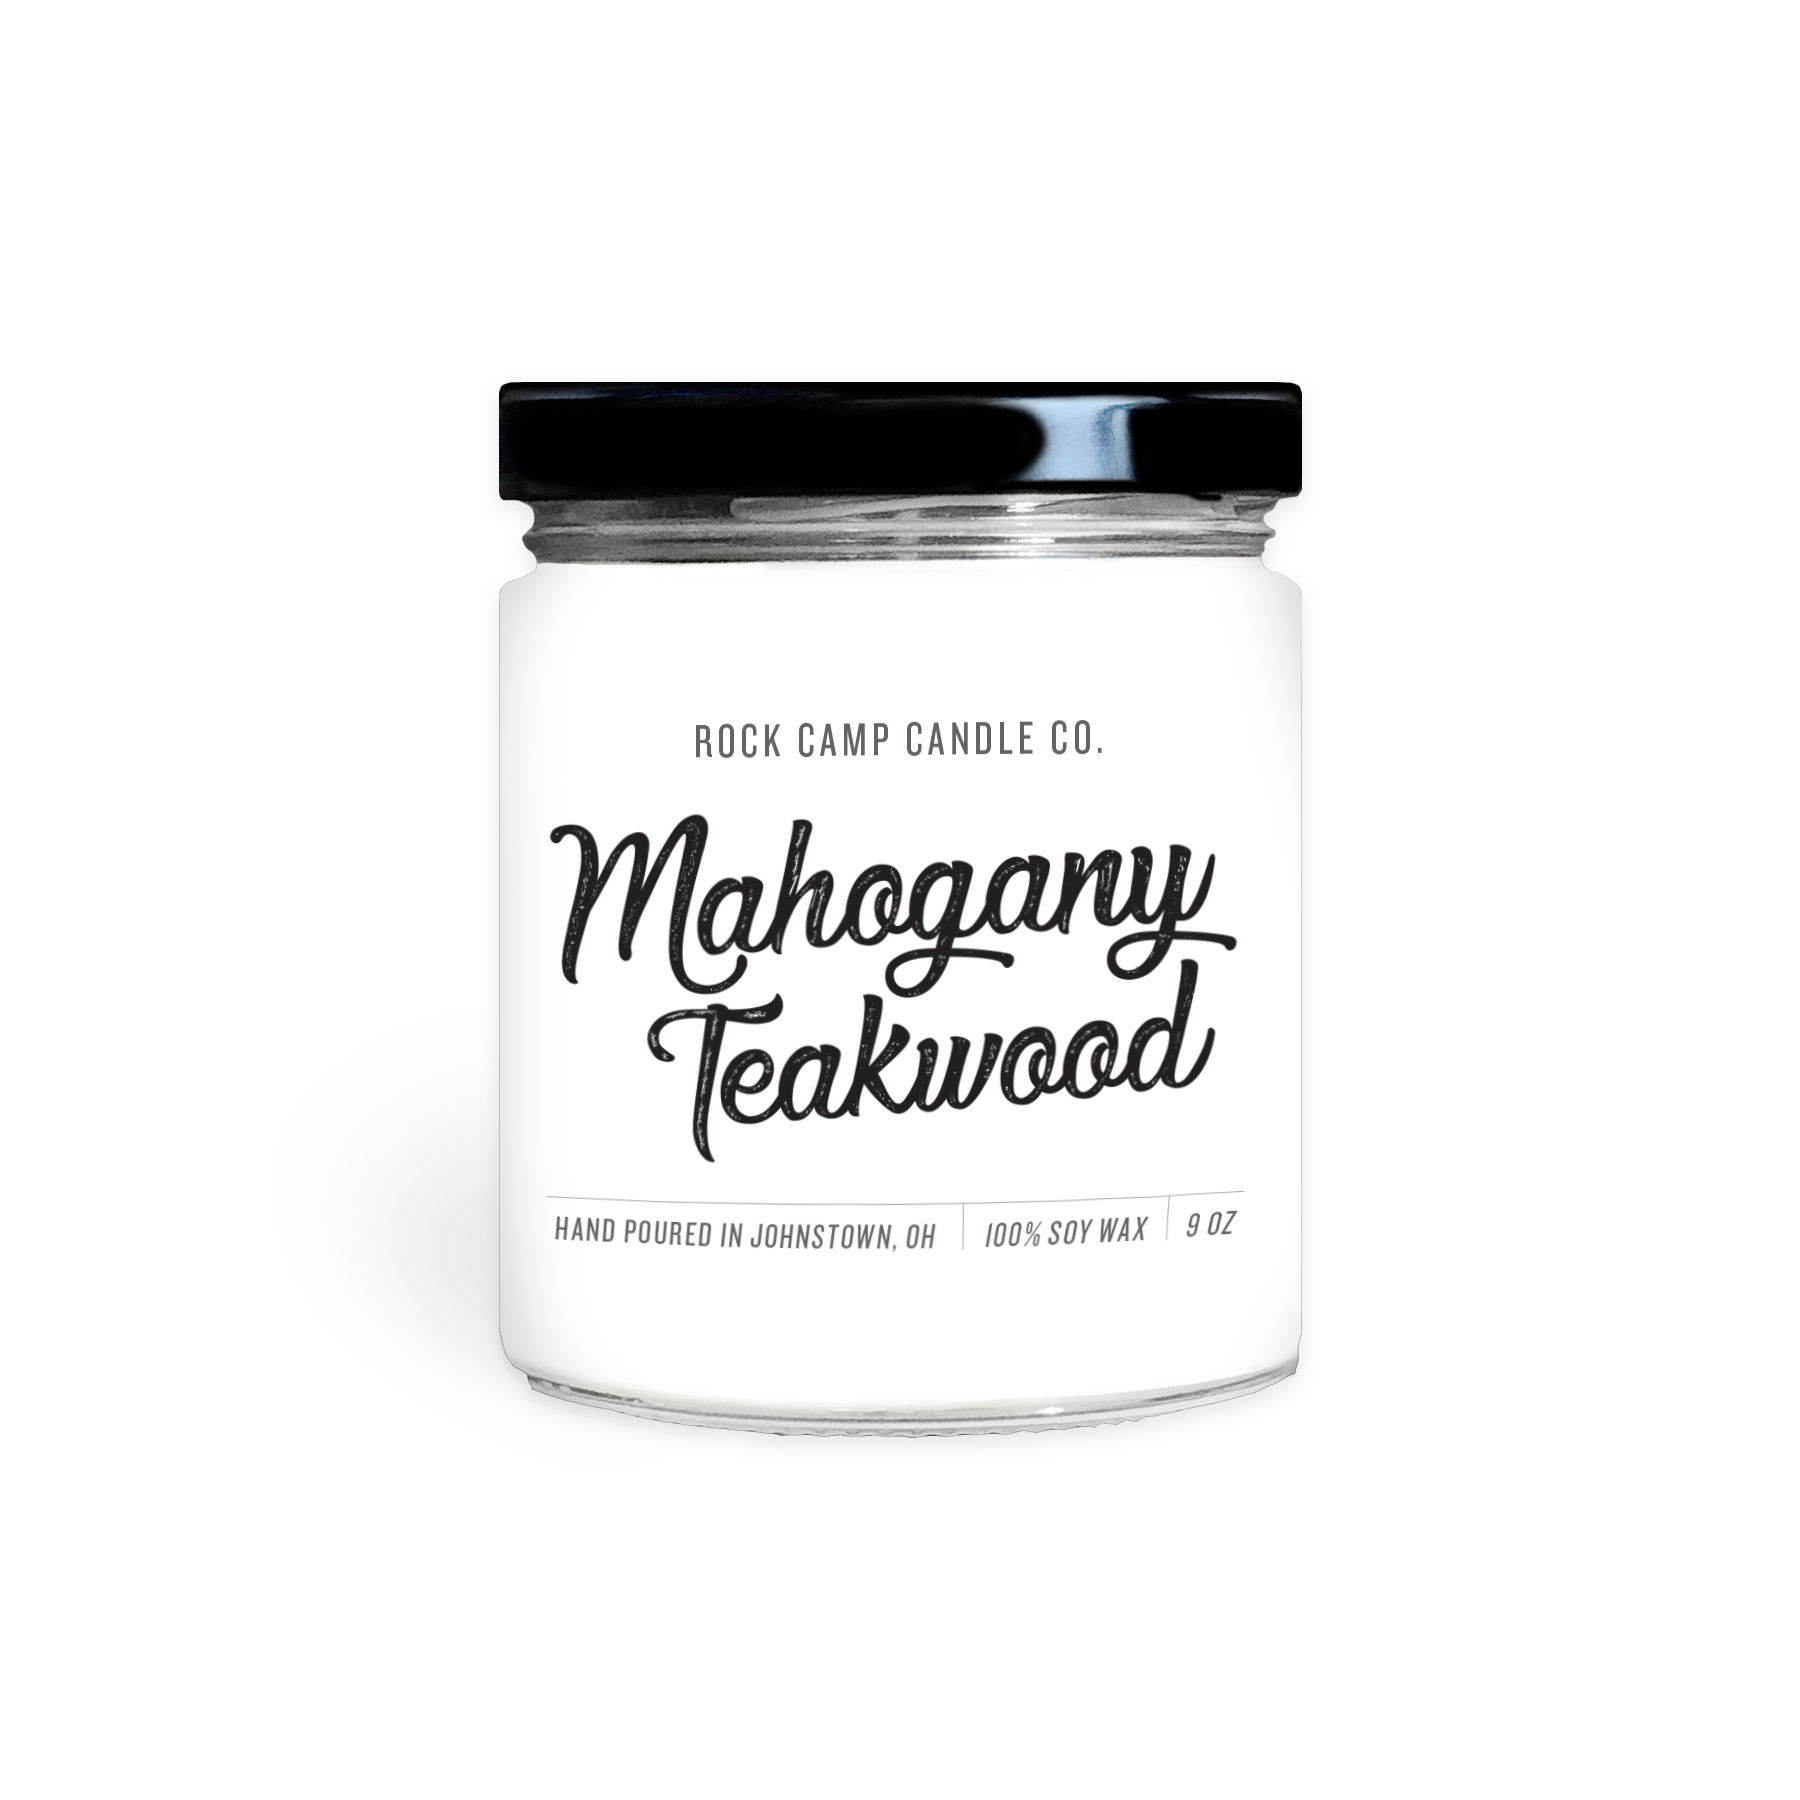 Mahogany Teakwood Is Candle Royalty